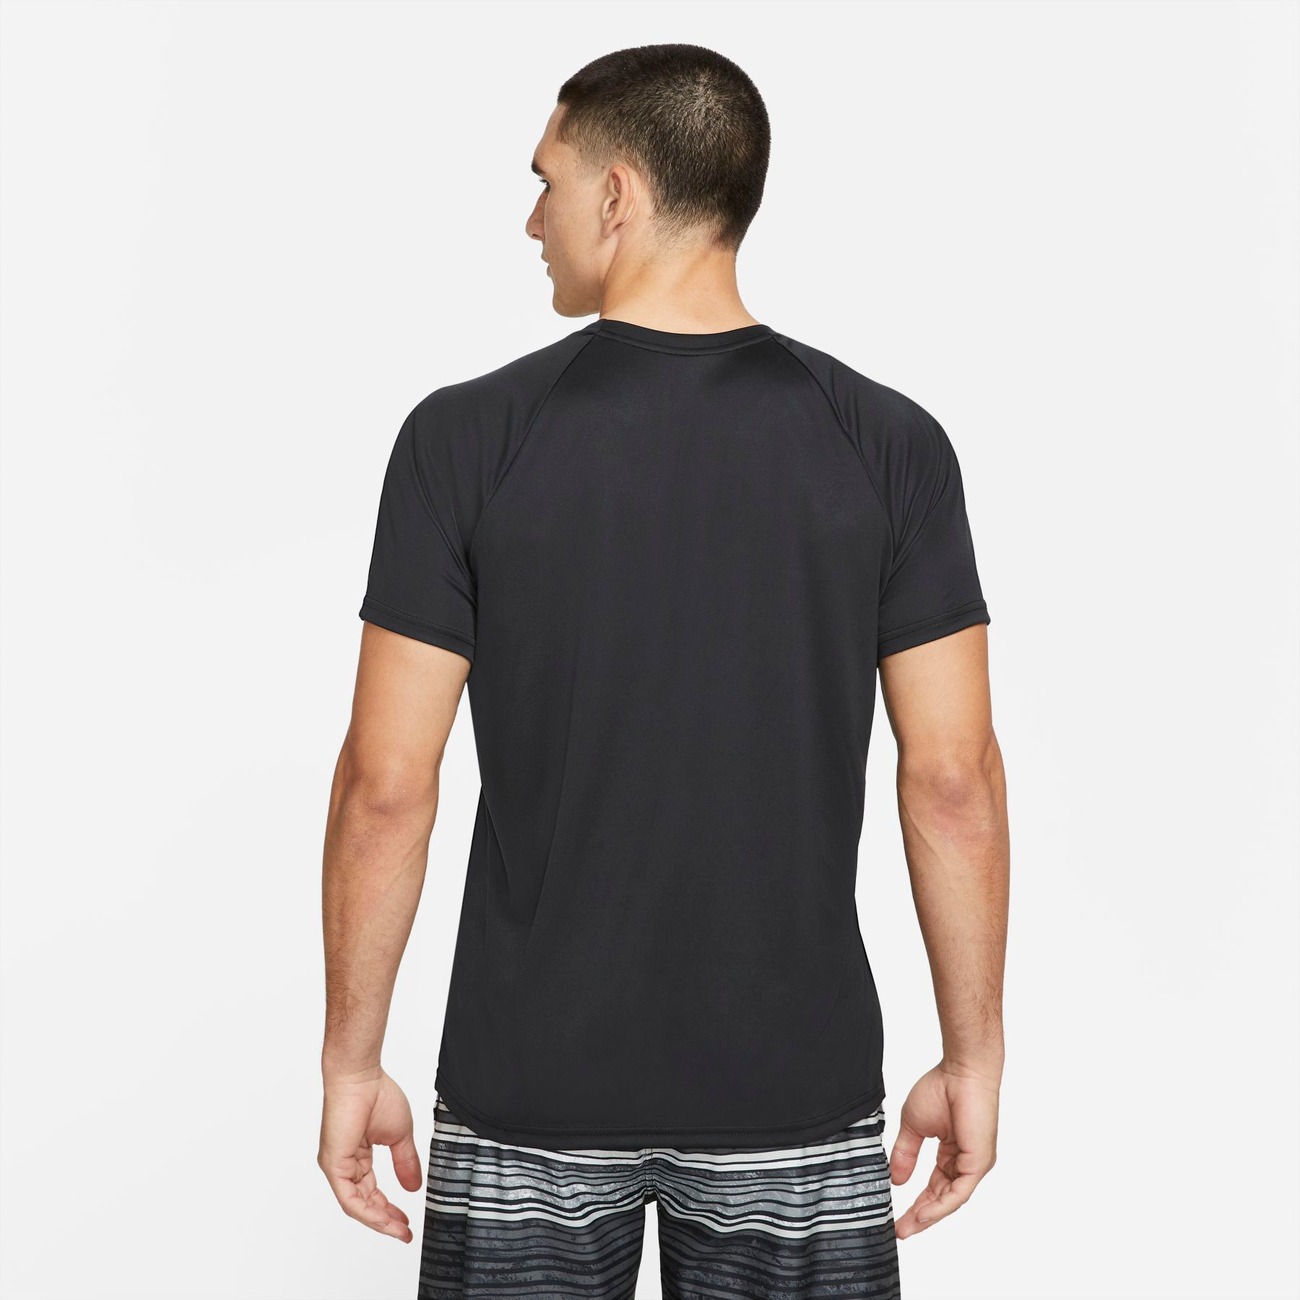 Camiseta Nike Essential Hydro Masculina - Foto 2